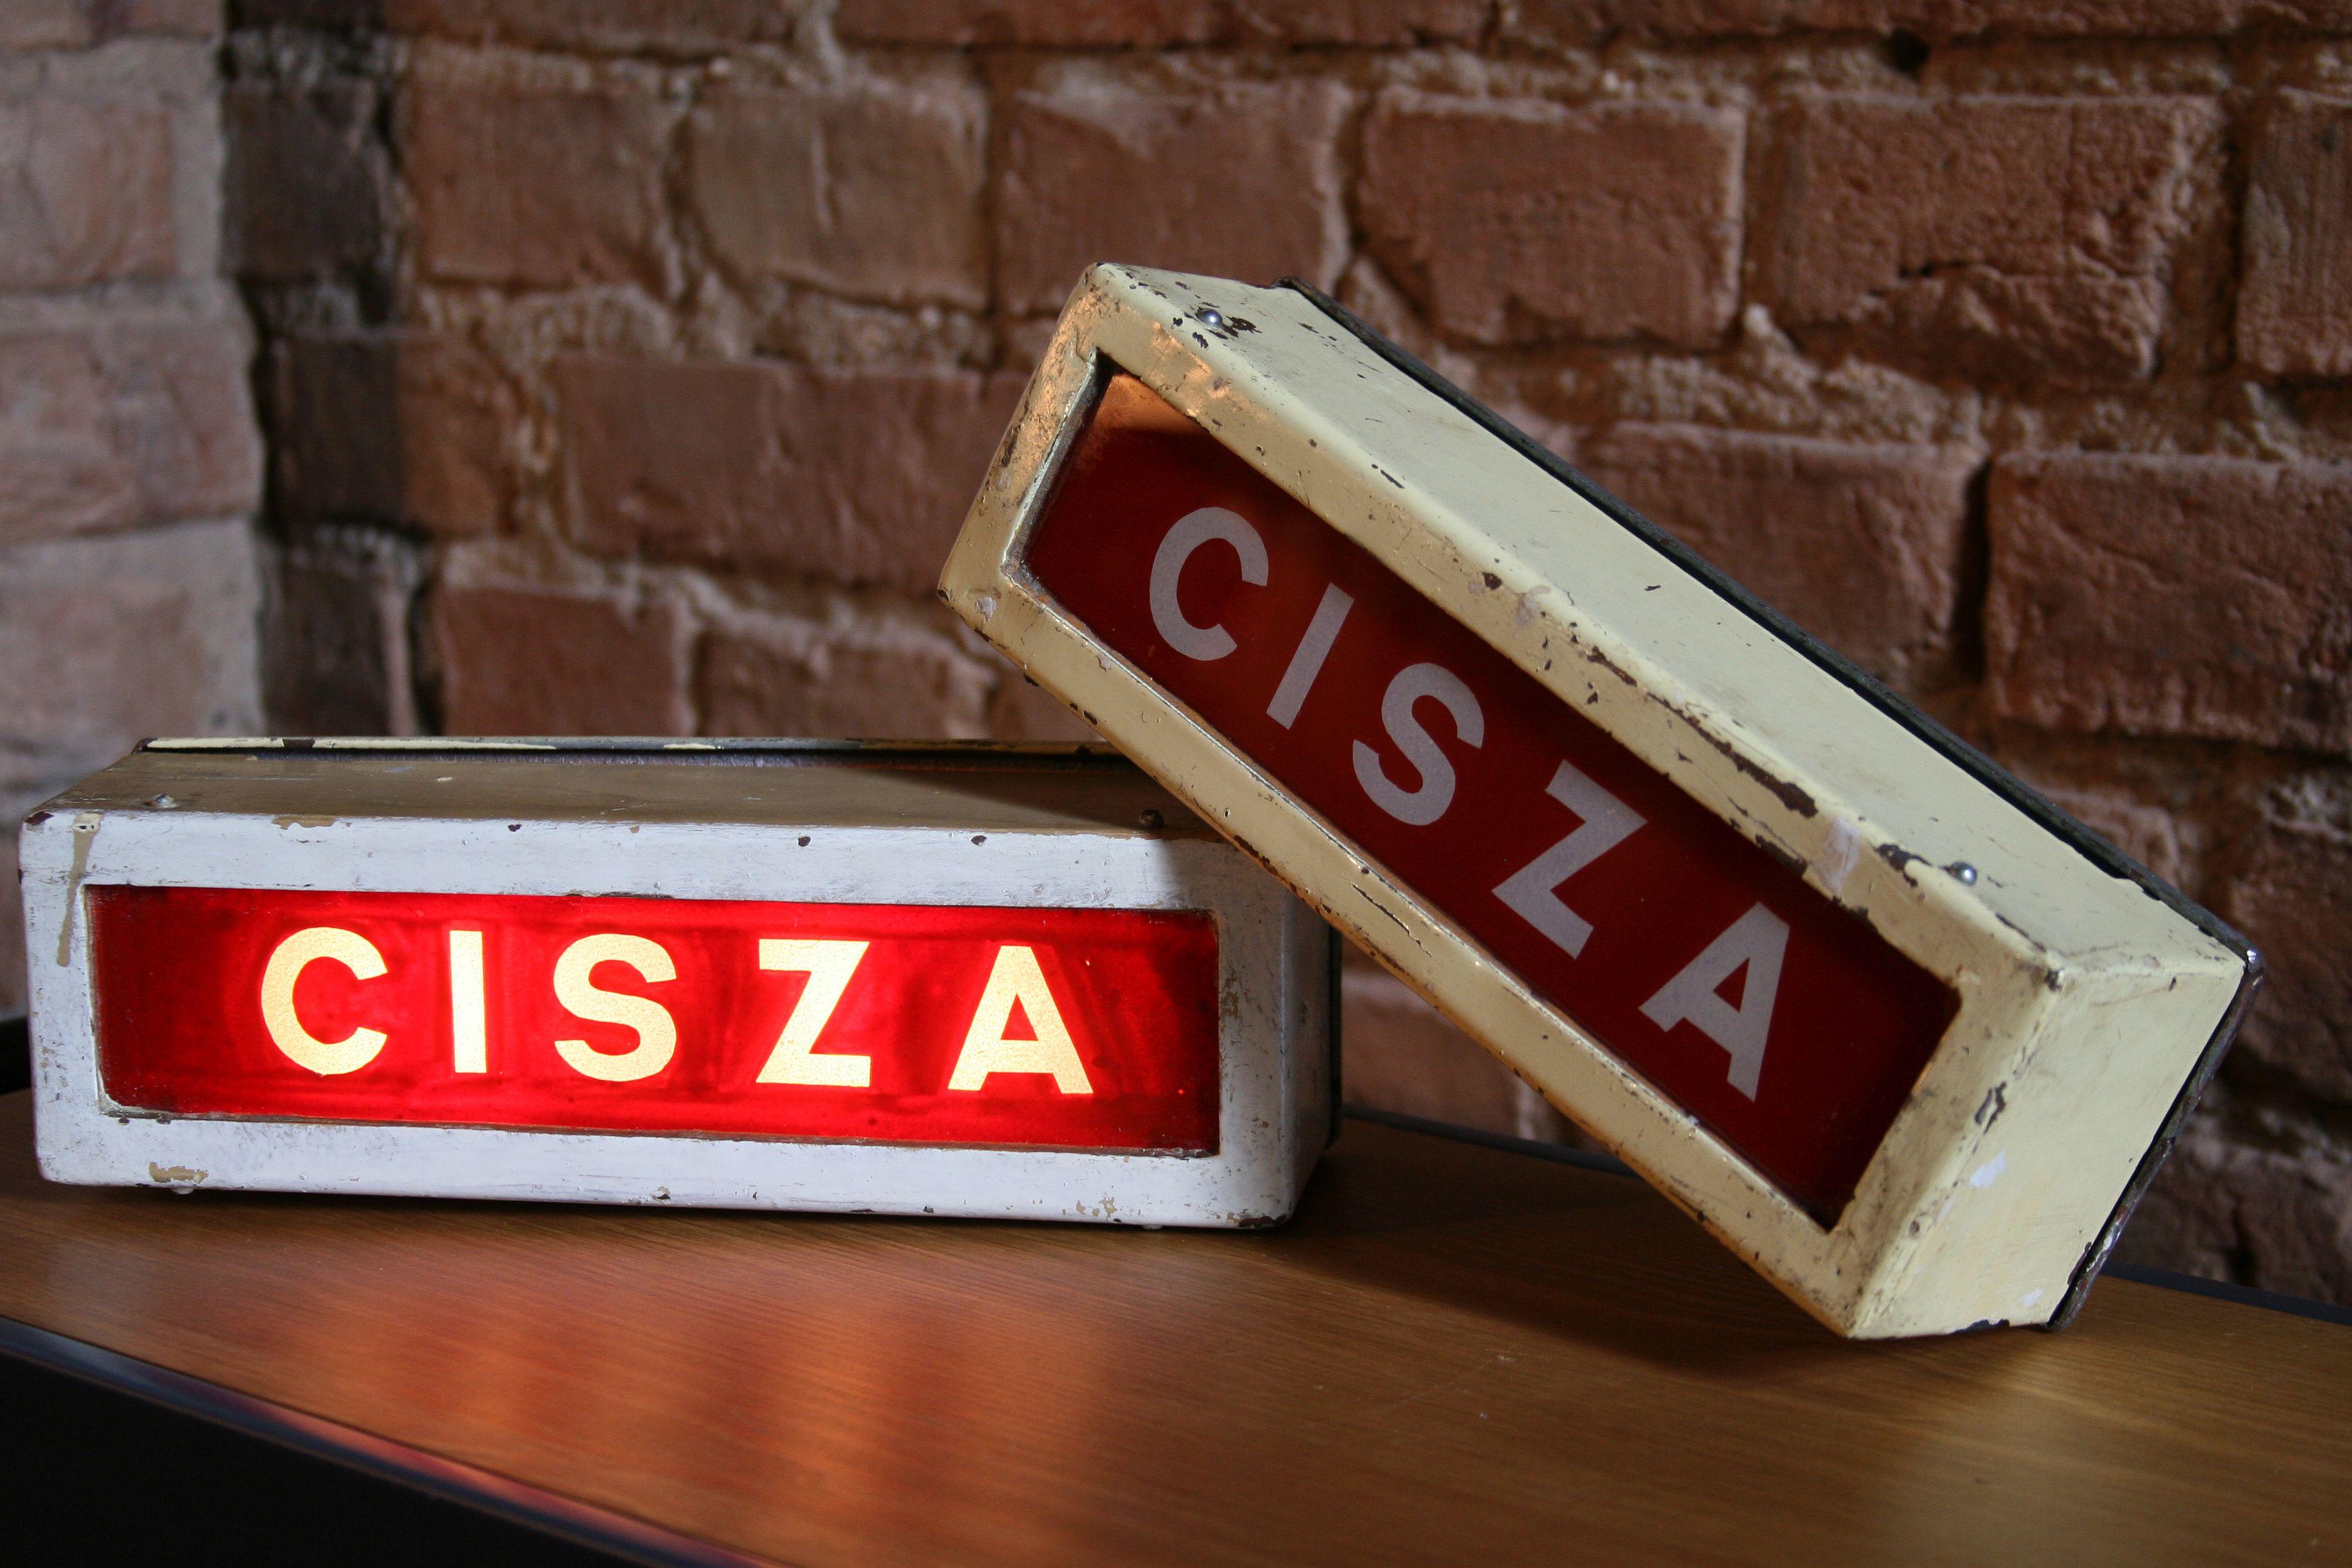 Mid-20th Century 1950s Illuminated Theater Sign “CISZA”, Meaning “Silence”